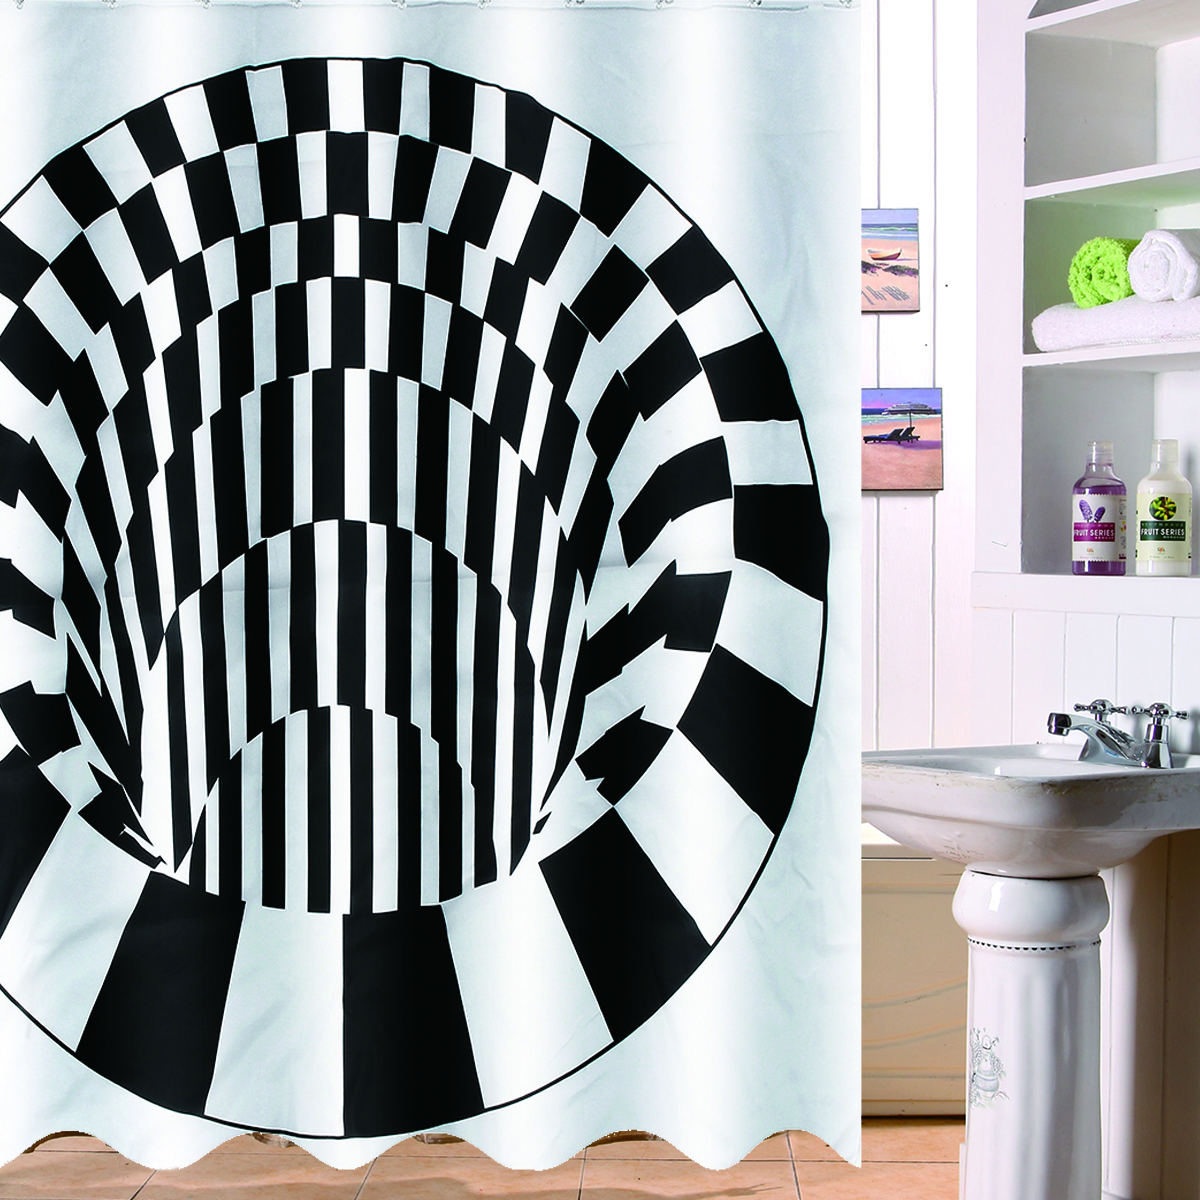 3D-Effect-Geometric-Square-Bathroom-Bath-Shower-Curtain-180180cm-w-12-1530246-1